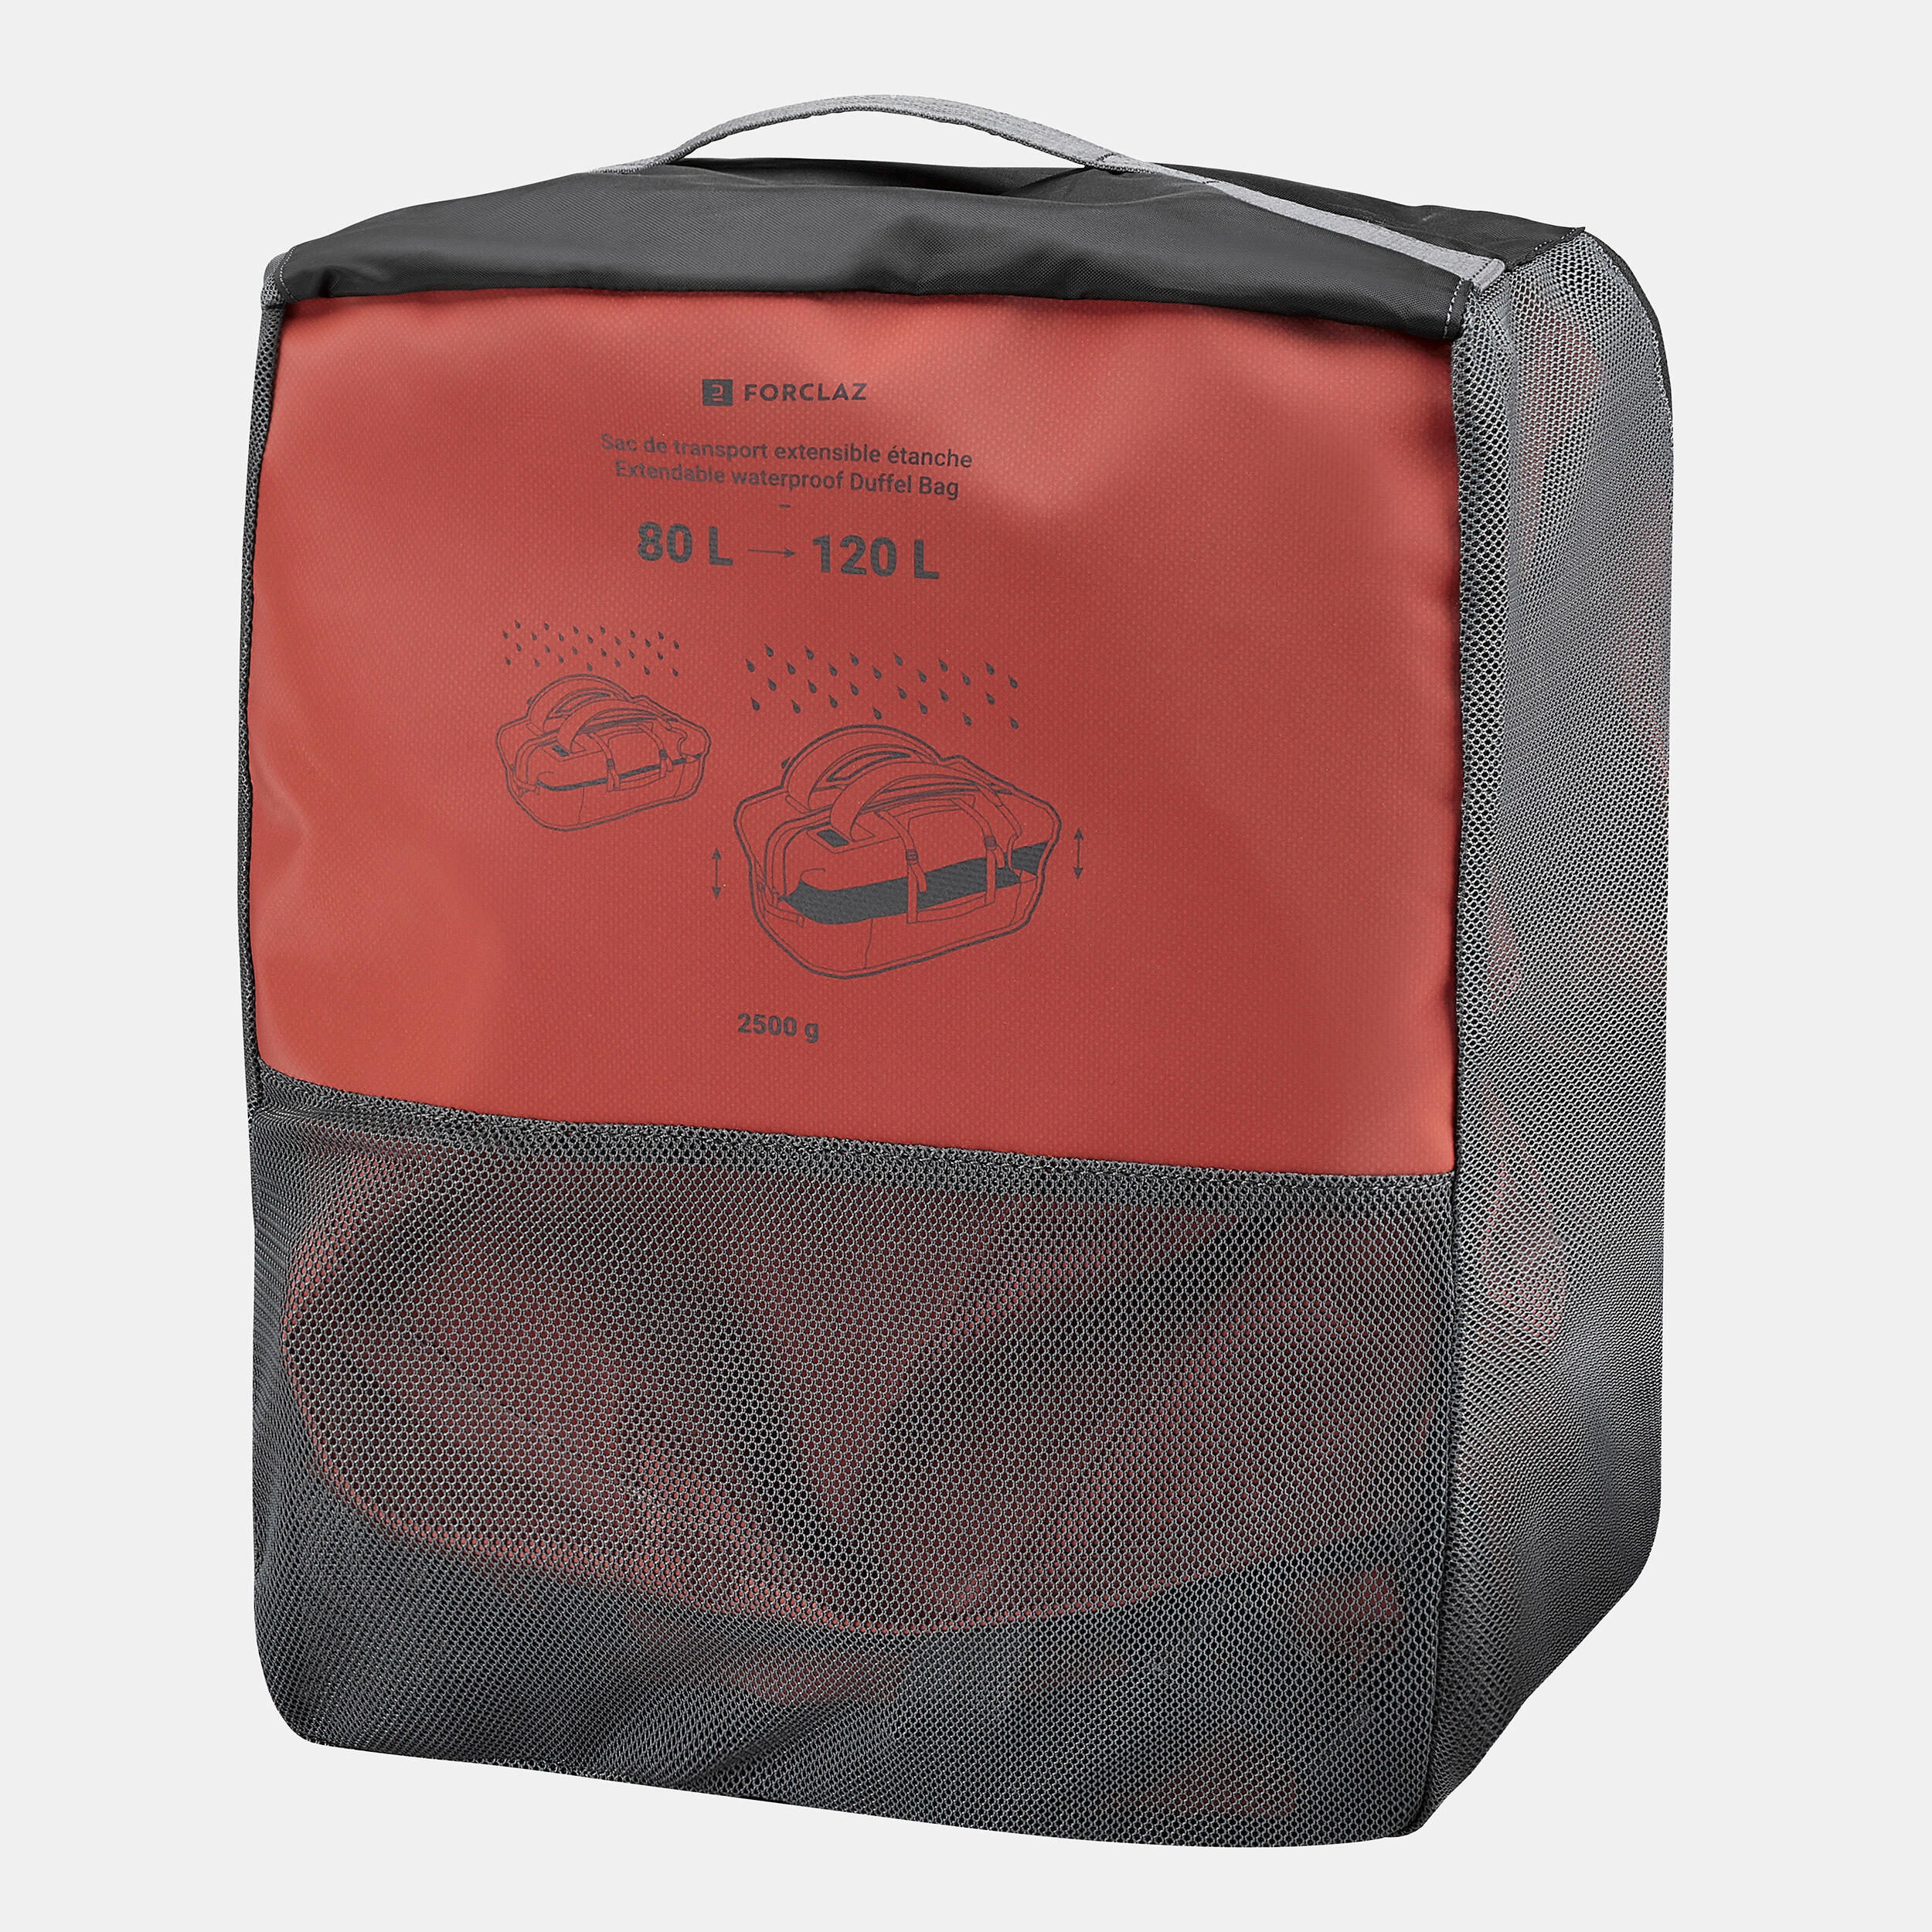 Online World Waterproof BagRoll Top Dry Bag  Perfect for  KayakingBoatingCanoeingFishingRaftingSwimmingCampingSnowboarding  Green Waterproof School Bag  School Bag  Flipkartcom